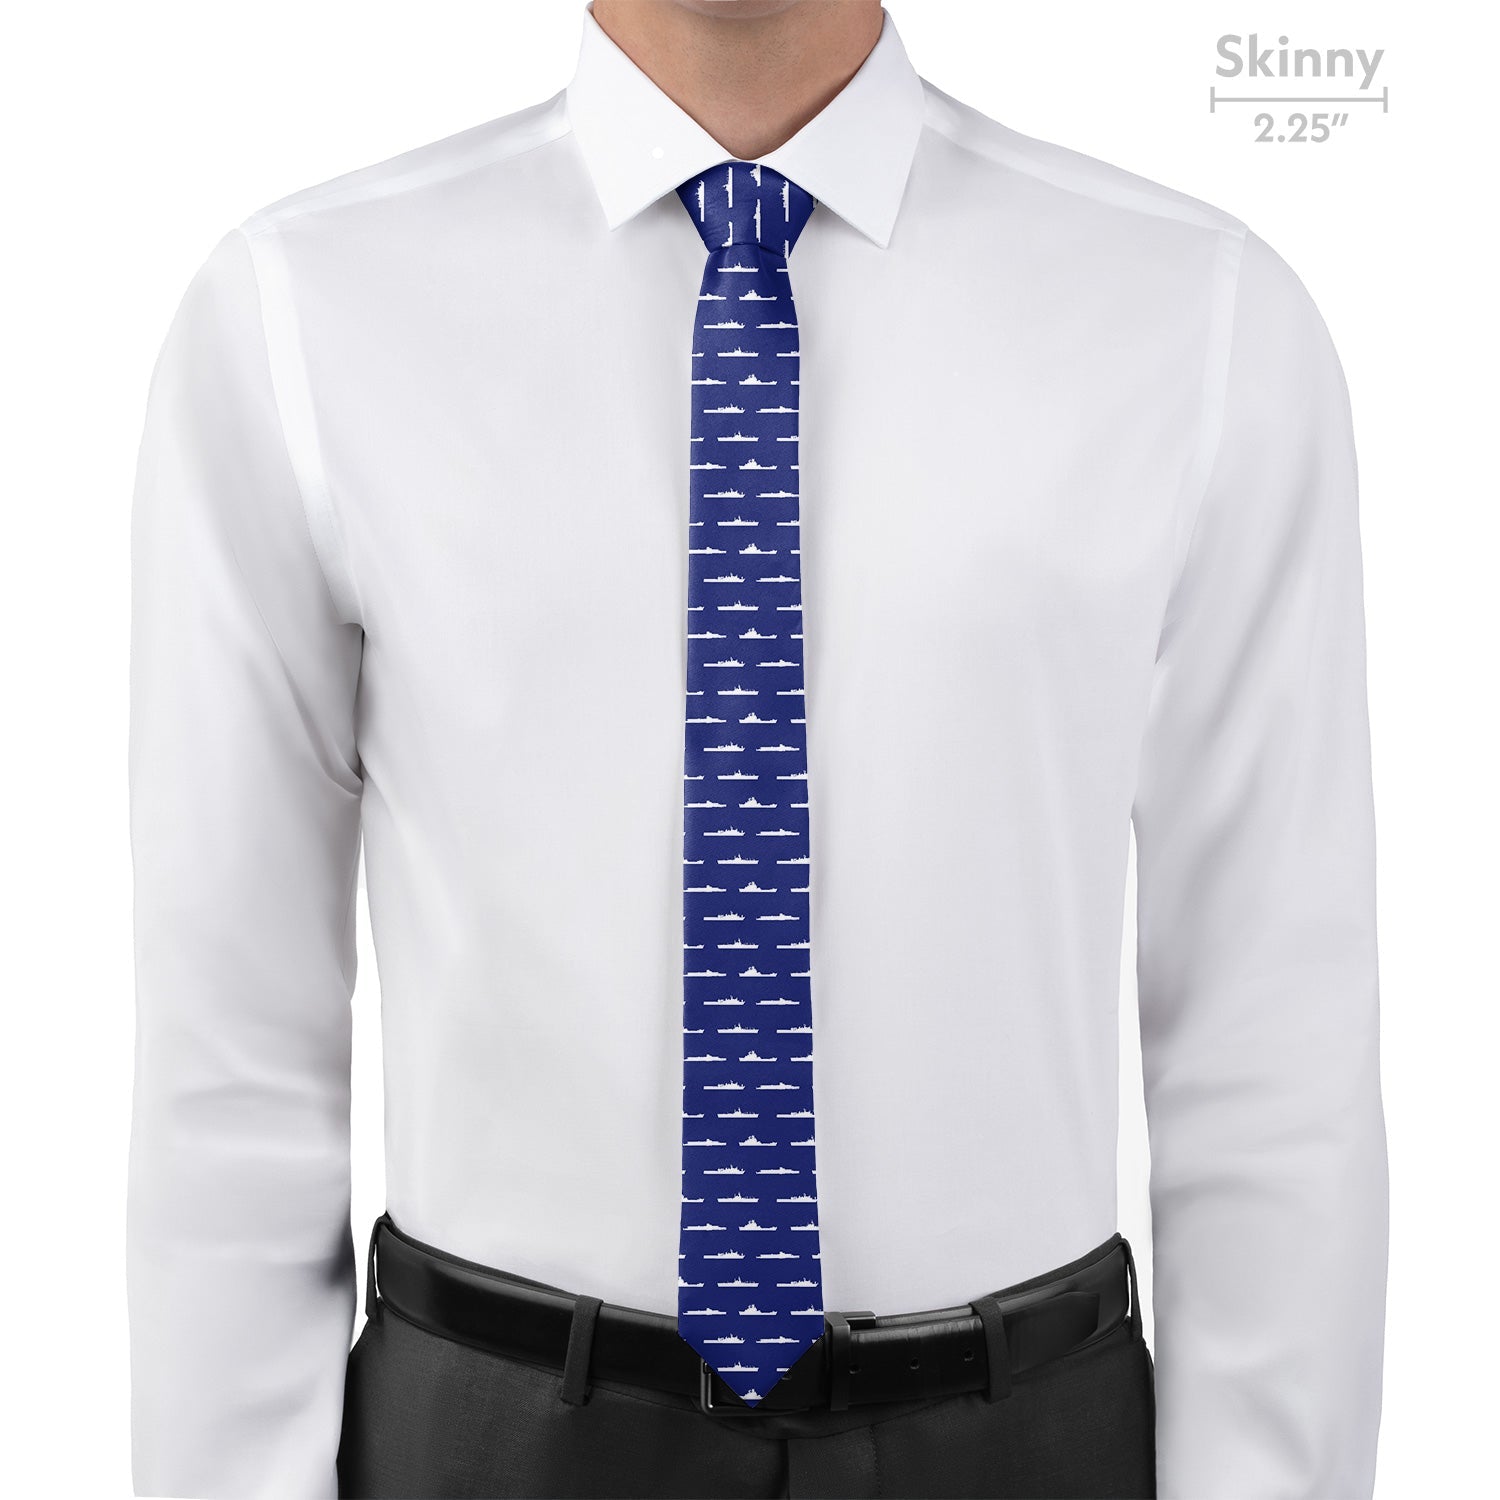 Naval Ships Necktie - Skinny - Knotty Tie Co.